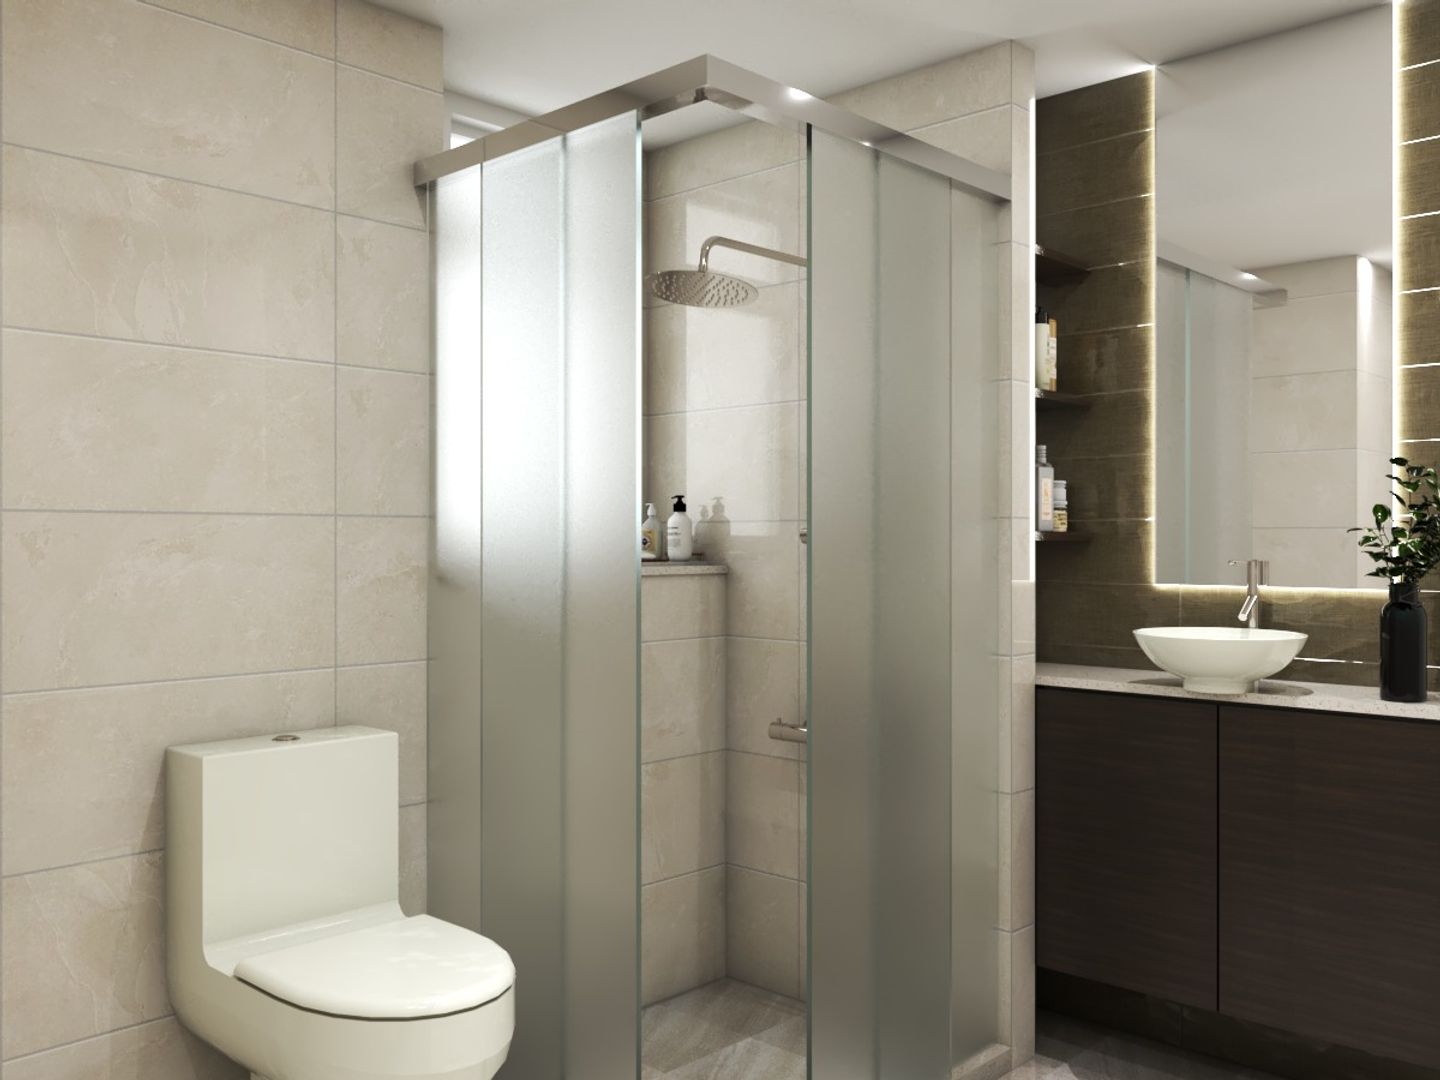 Glam Mirror Storage Cabinet Classic Bathroom Design with Open Shelves - Livspace